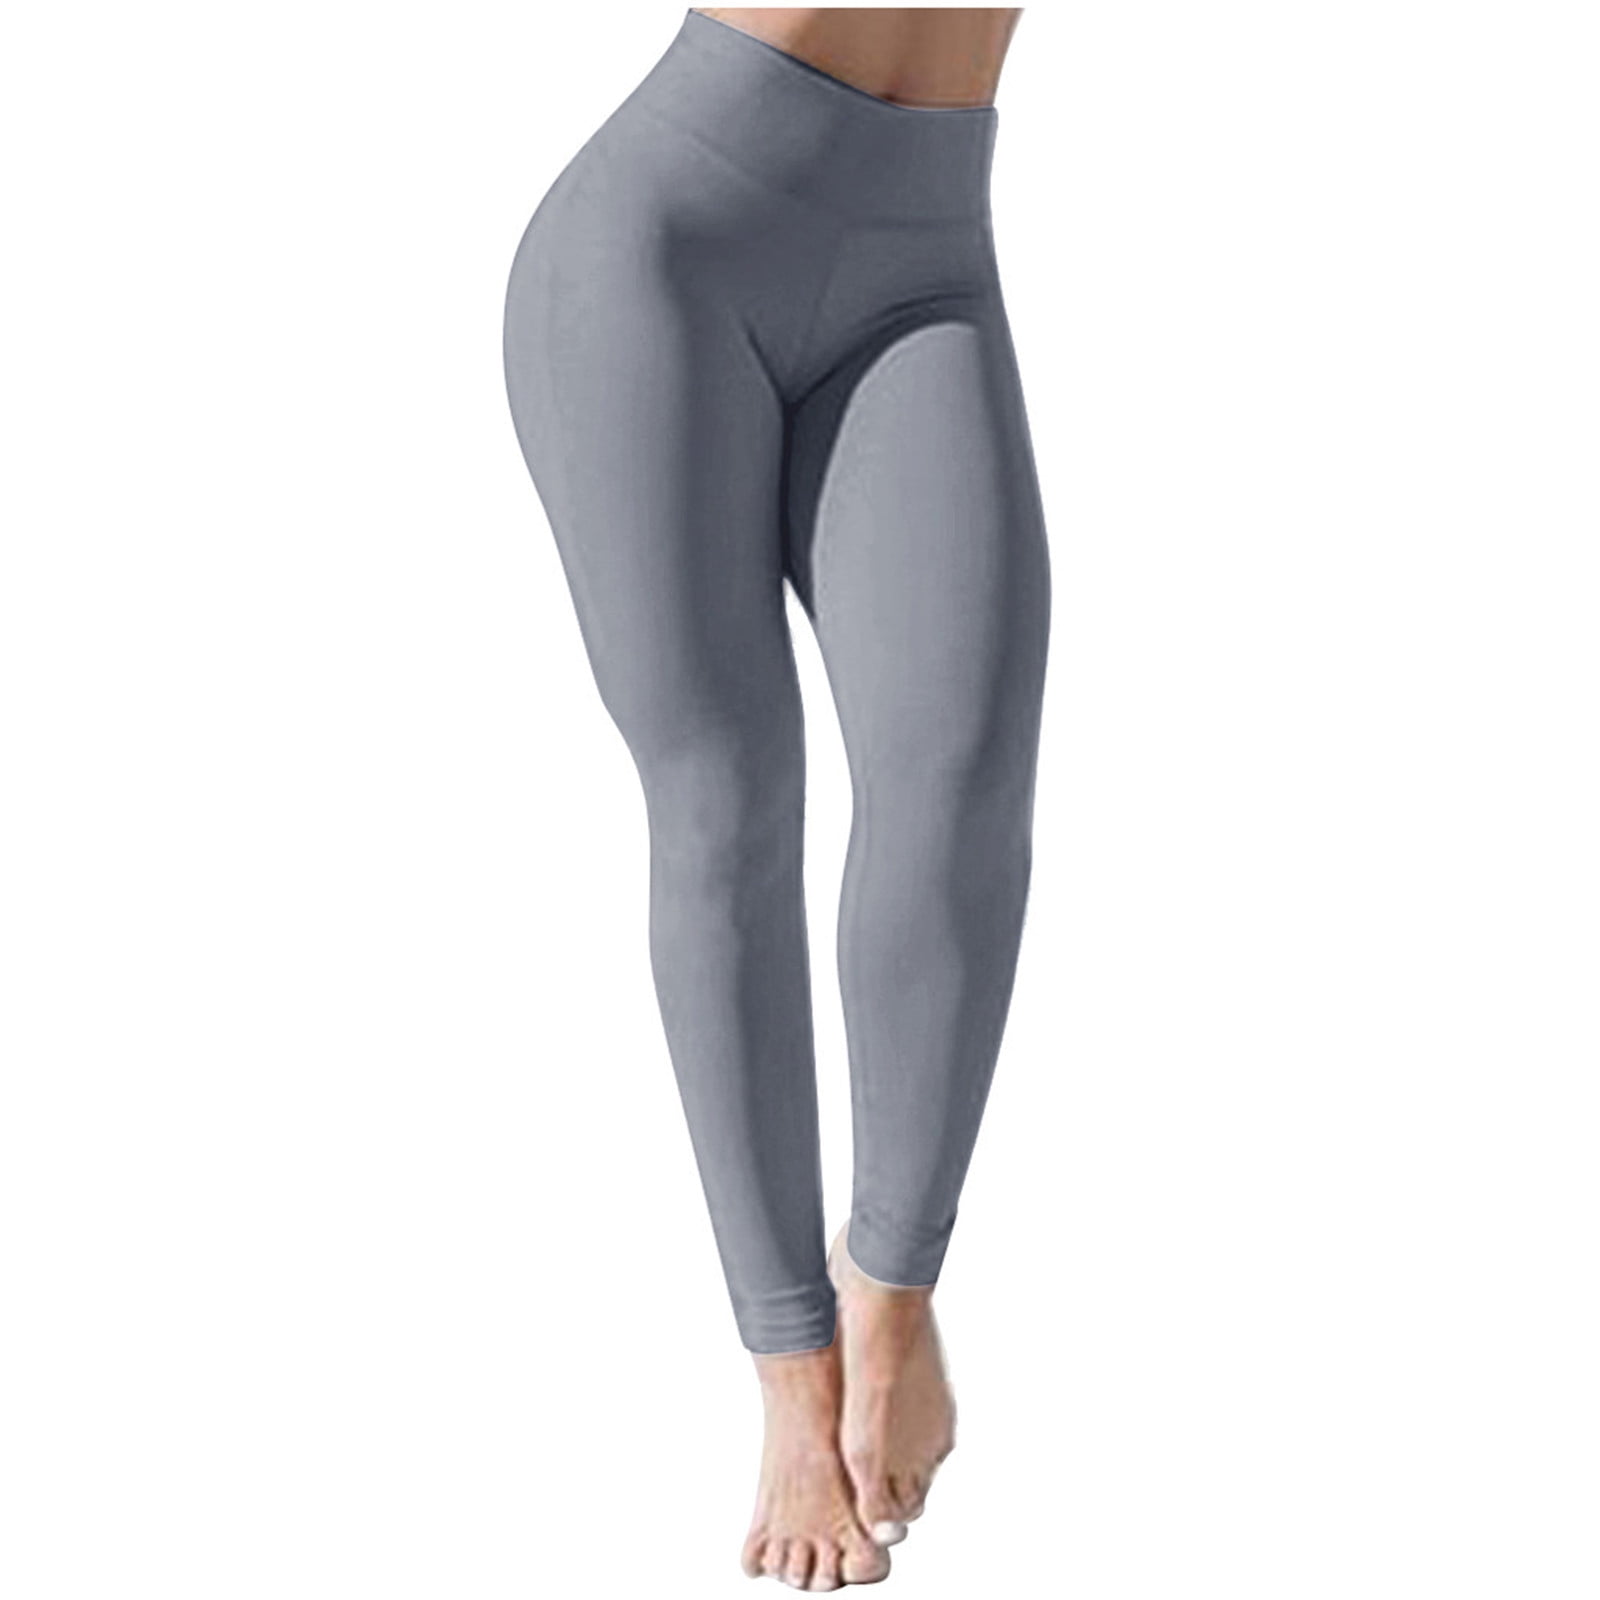 Leggings Women Plus Size Sports High Waist Yoga Pants Light Grey X-Large